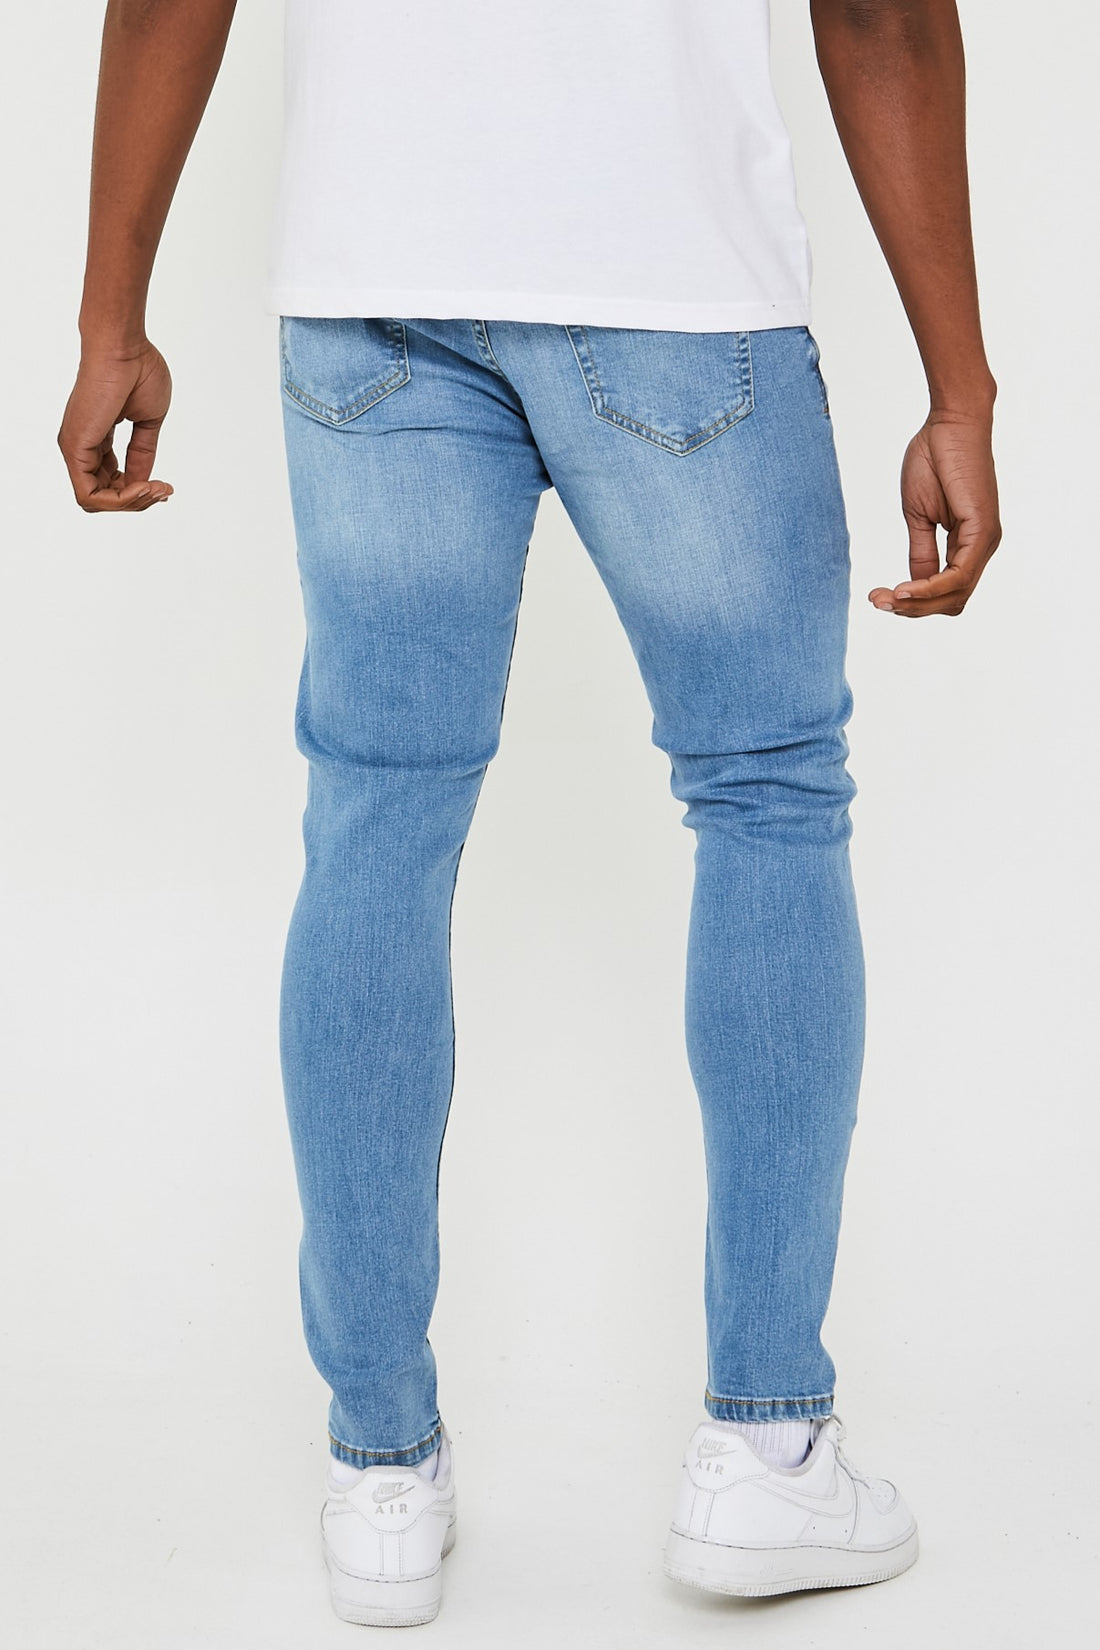 Just Organic Skinny Jeans - Light Blue